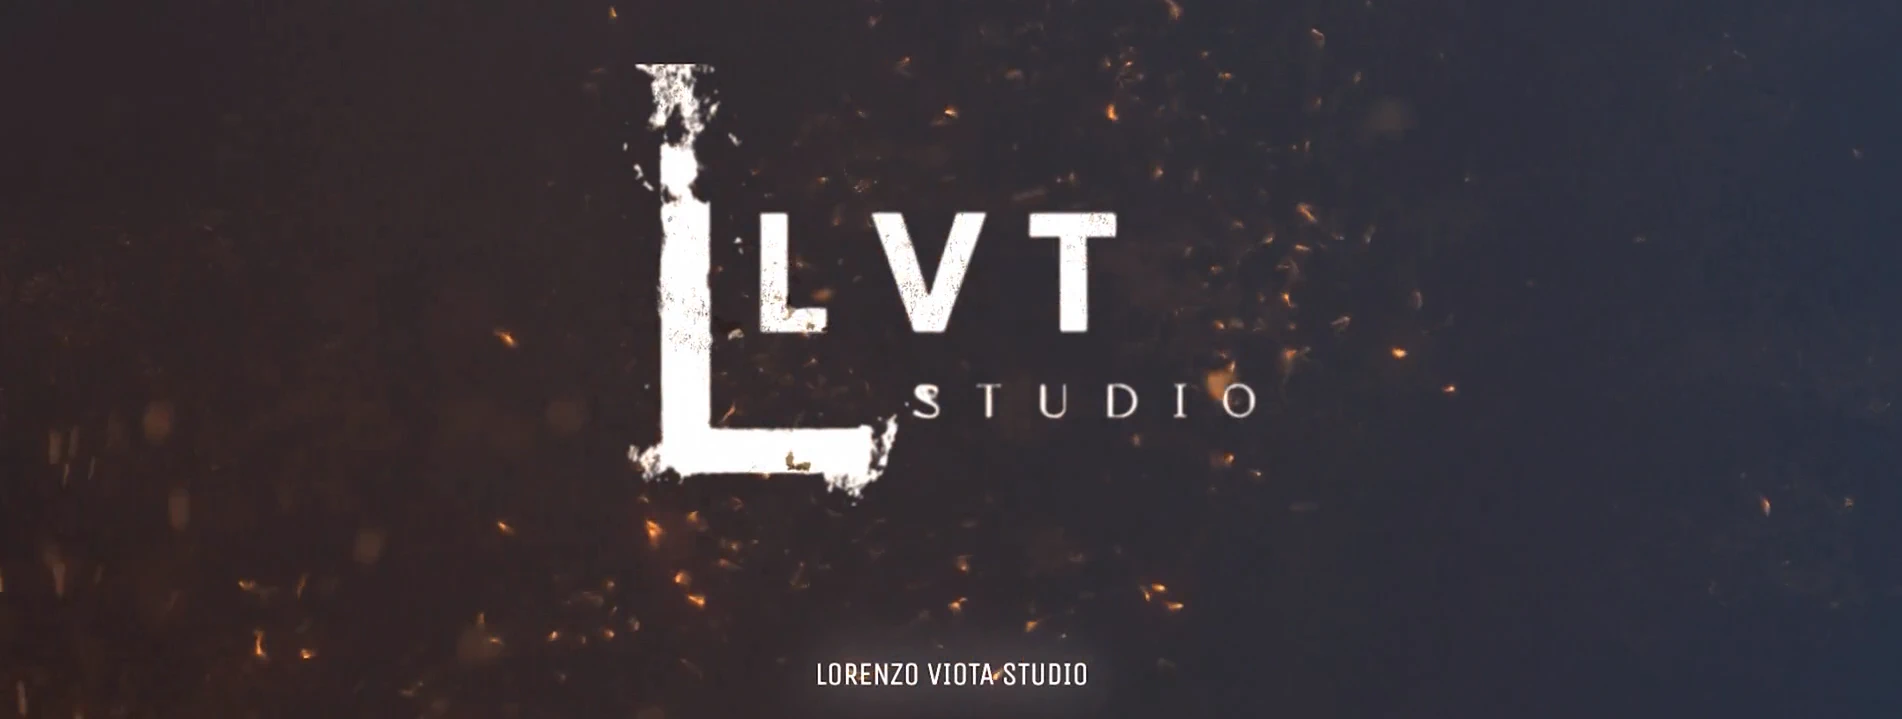 Lorenzo Viota LVT Studio Fan Site